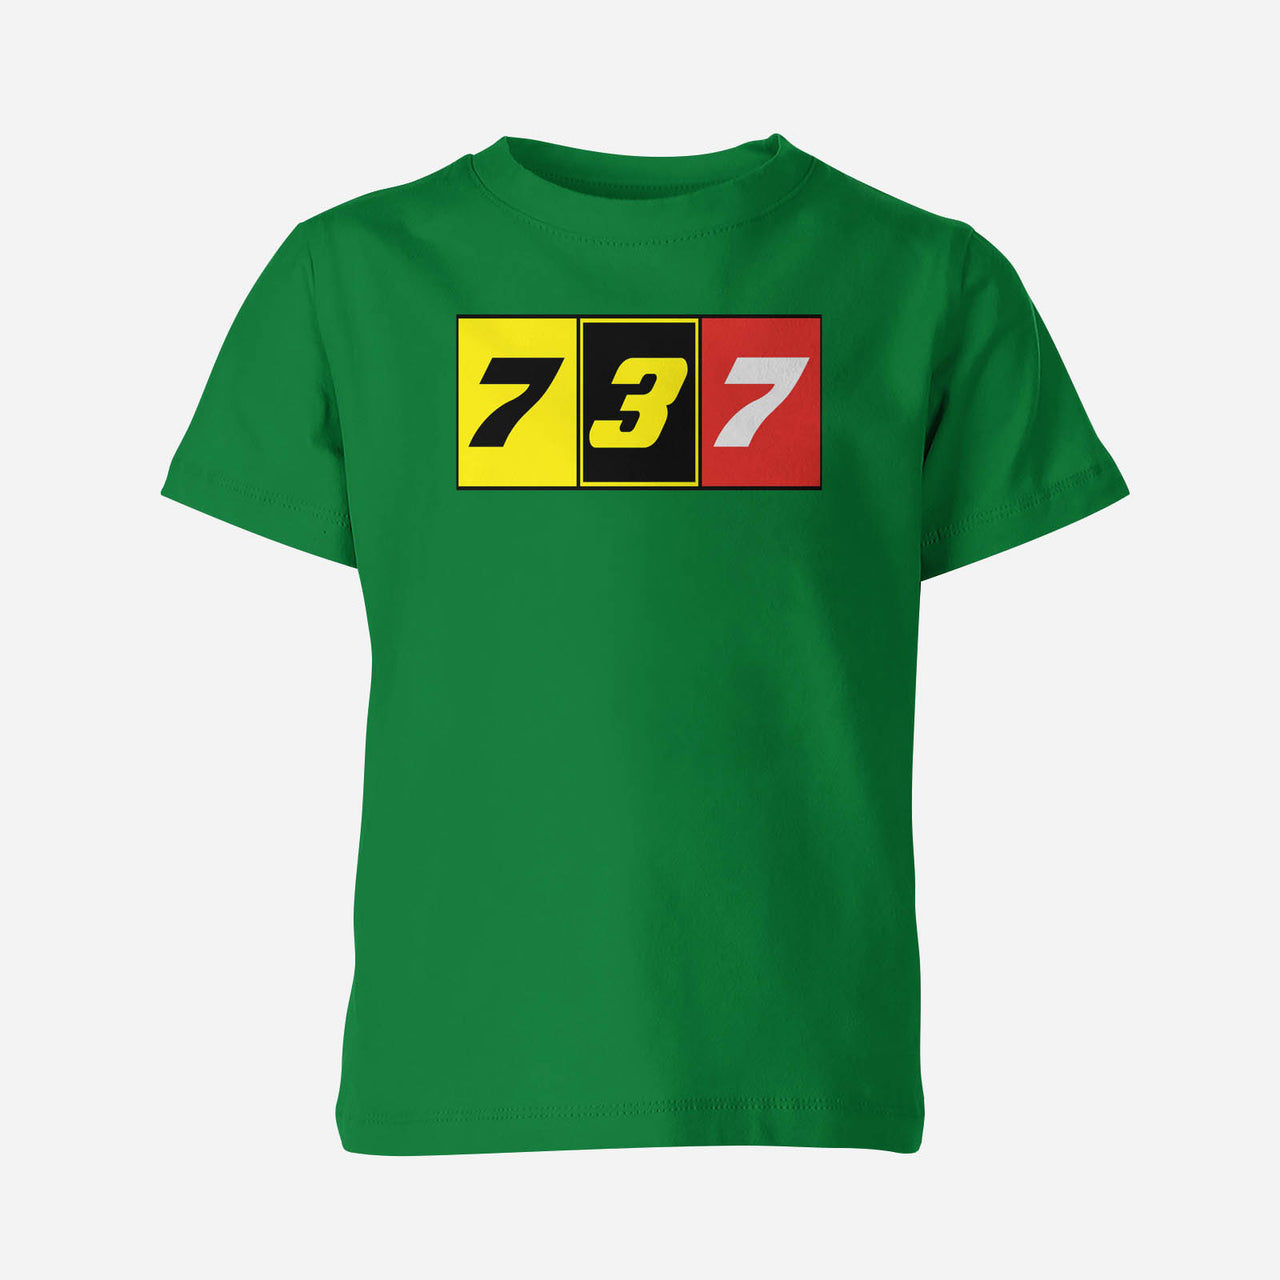 Flat Colourful 737 Designed Children T-Shirts